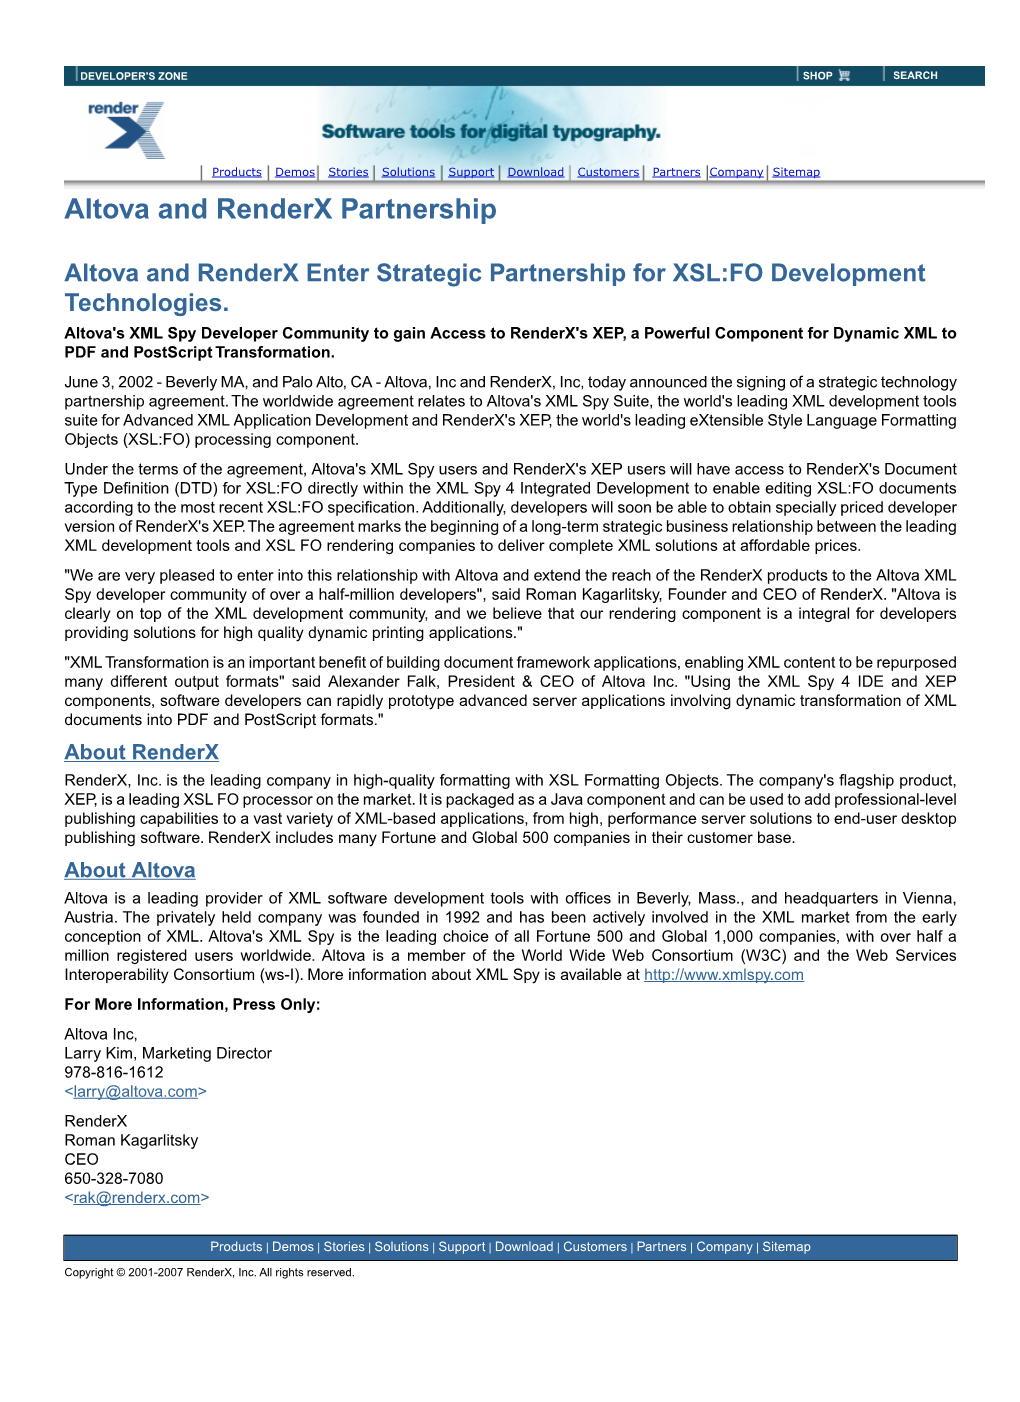 Altova and Renderx Partnership